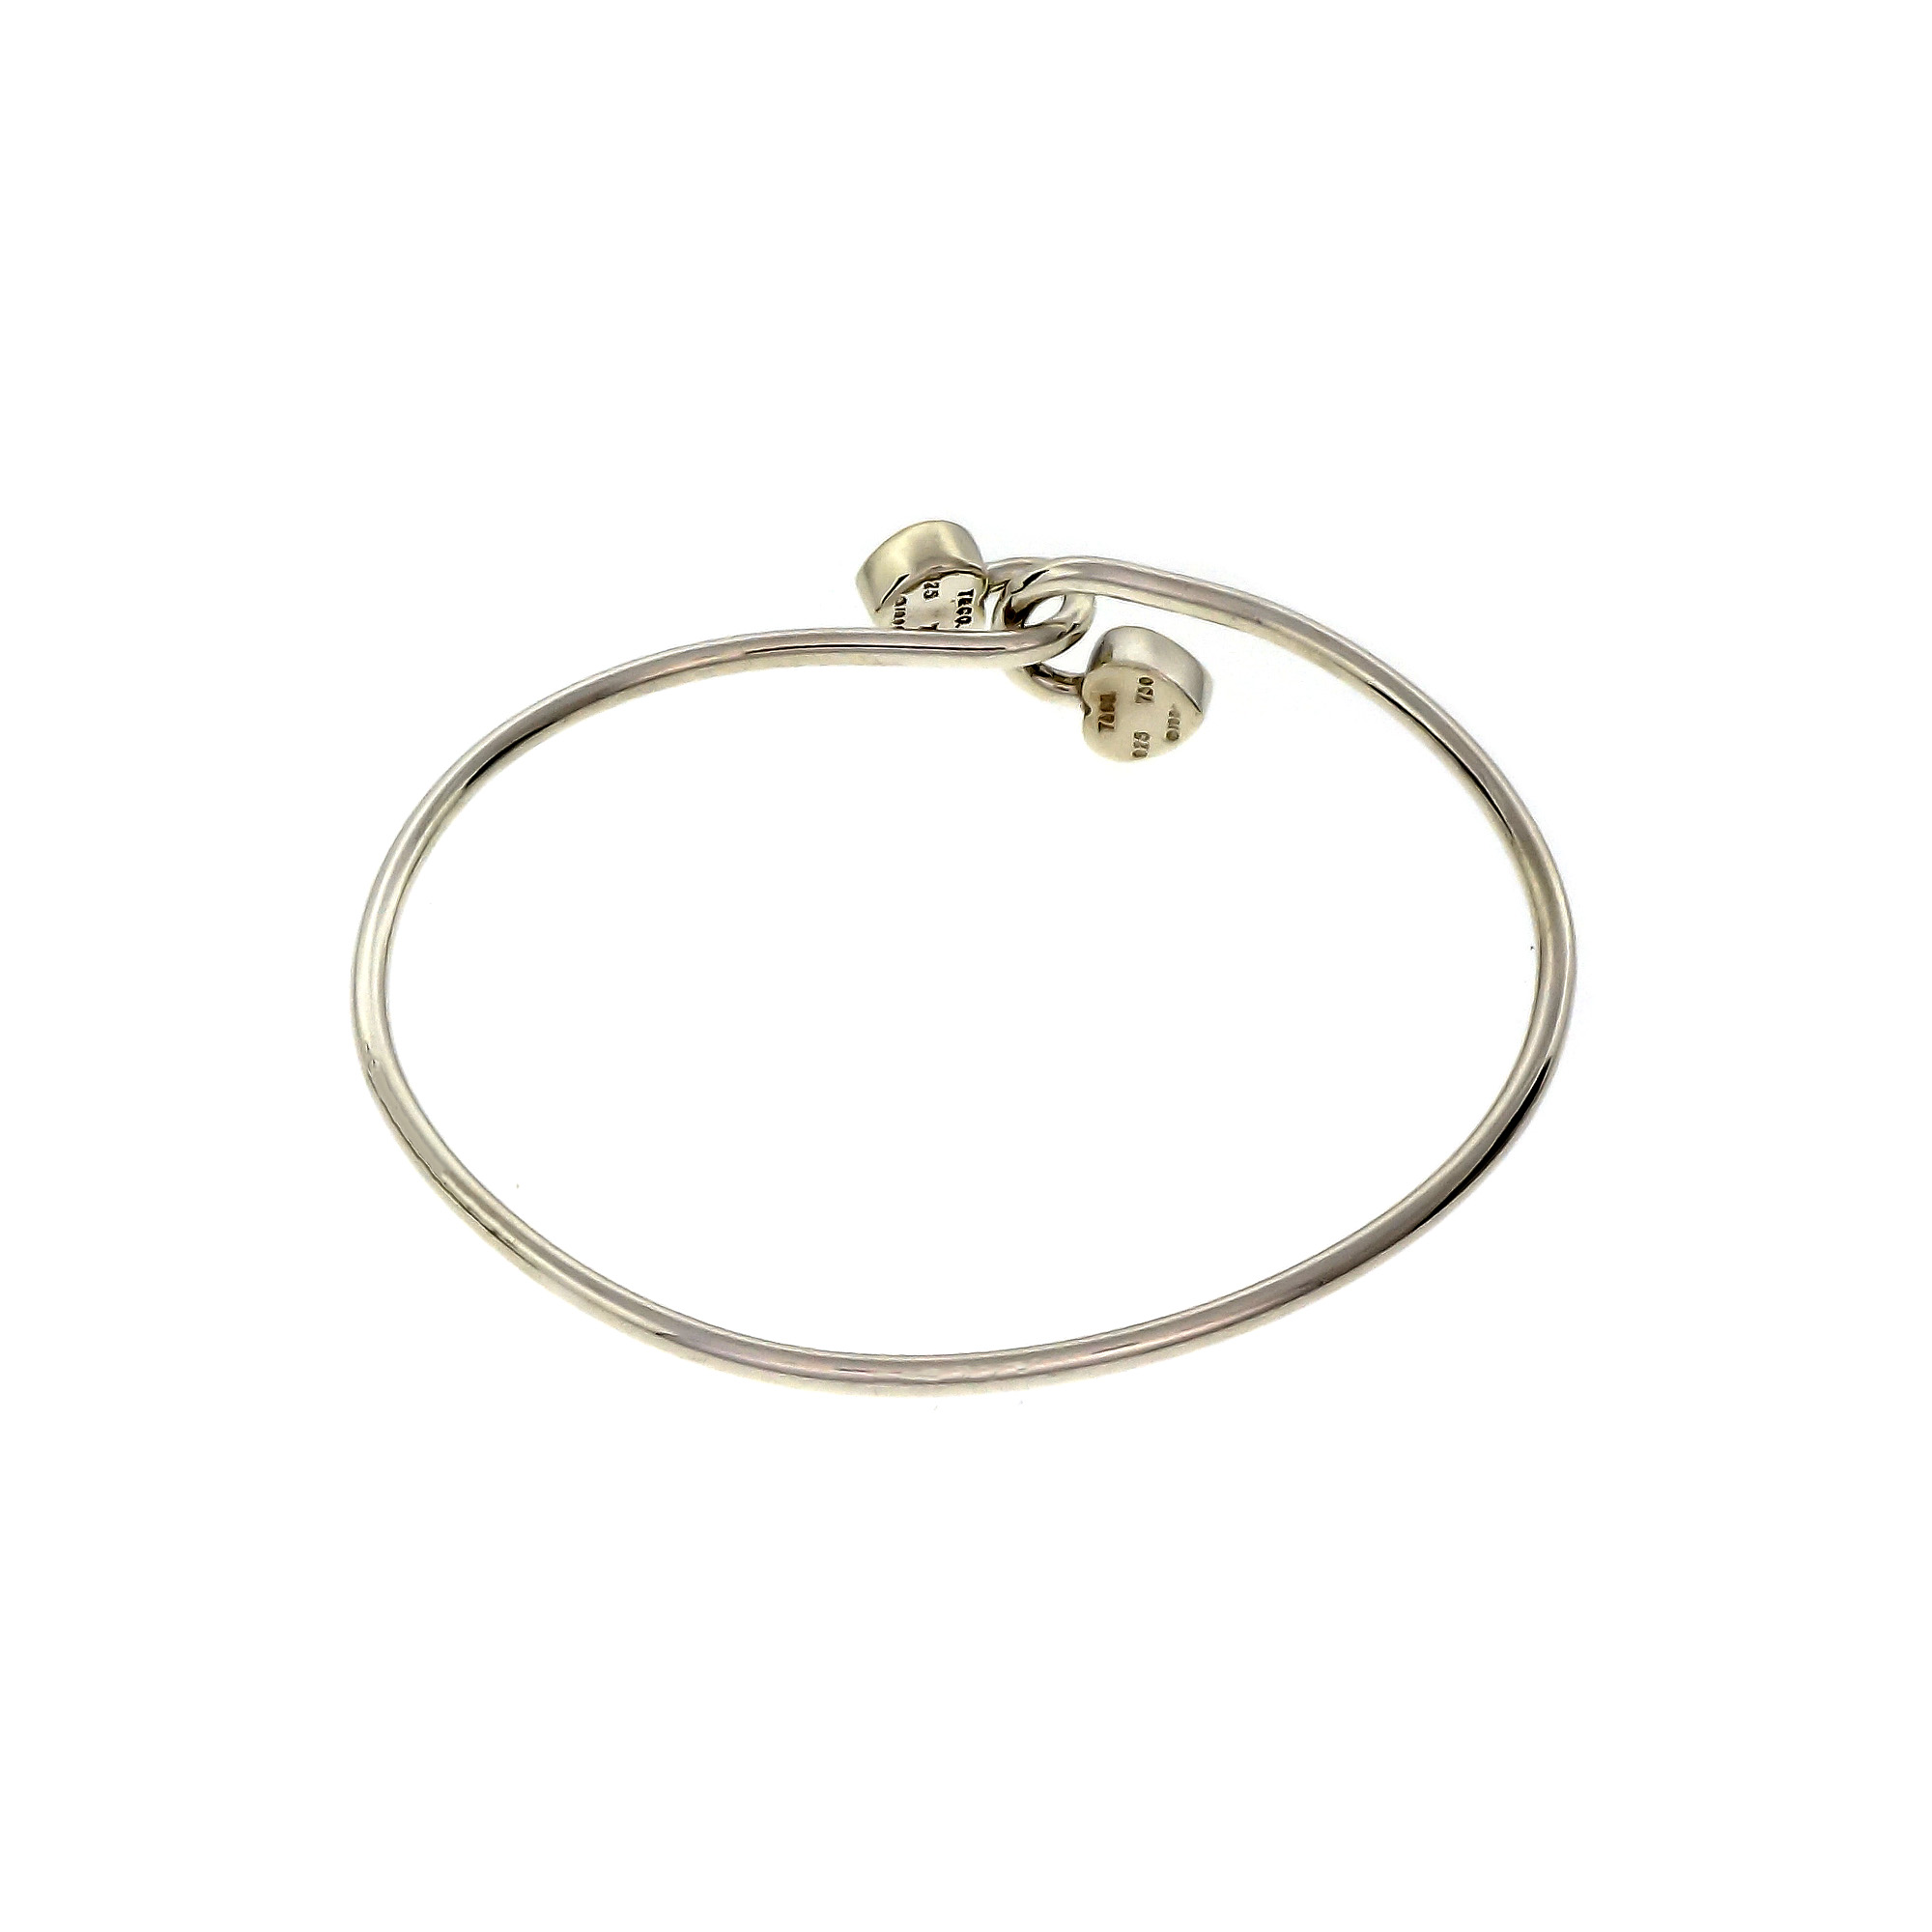 Tiffany & Co Double Heart Bangle Bracelet Silver 18k Yellow Gold | eBay